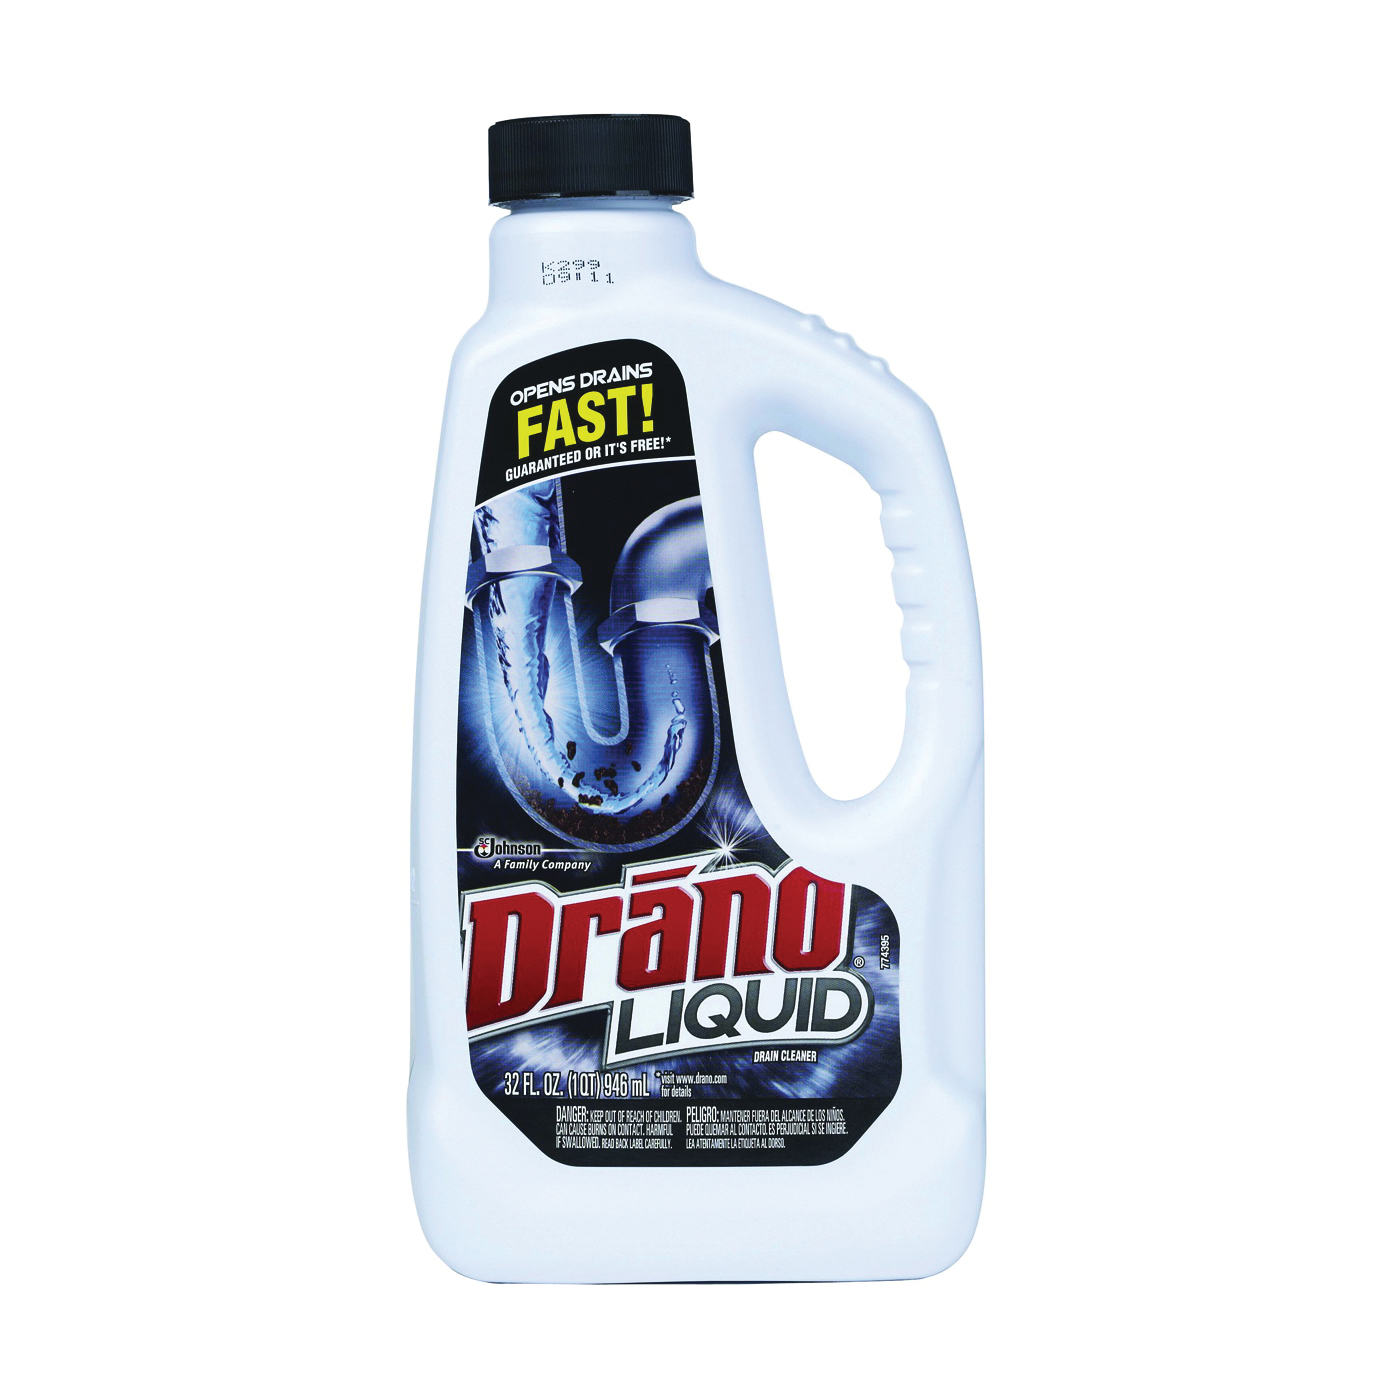 Drano 116 Clog Remover, Liquid, Natural, Bleach, 32 oz Bottle - 1